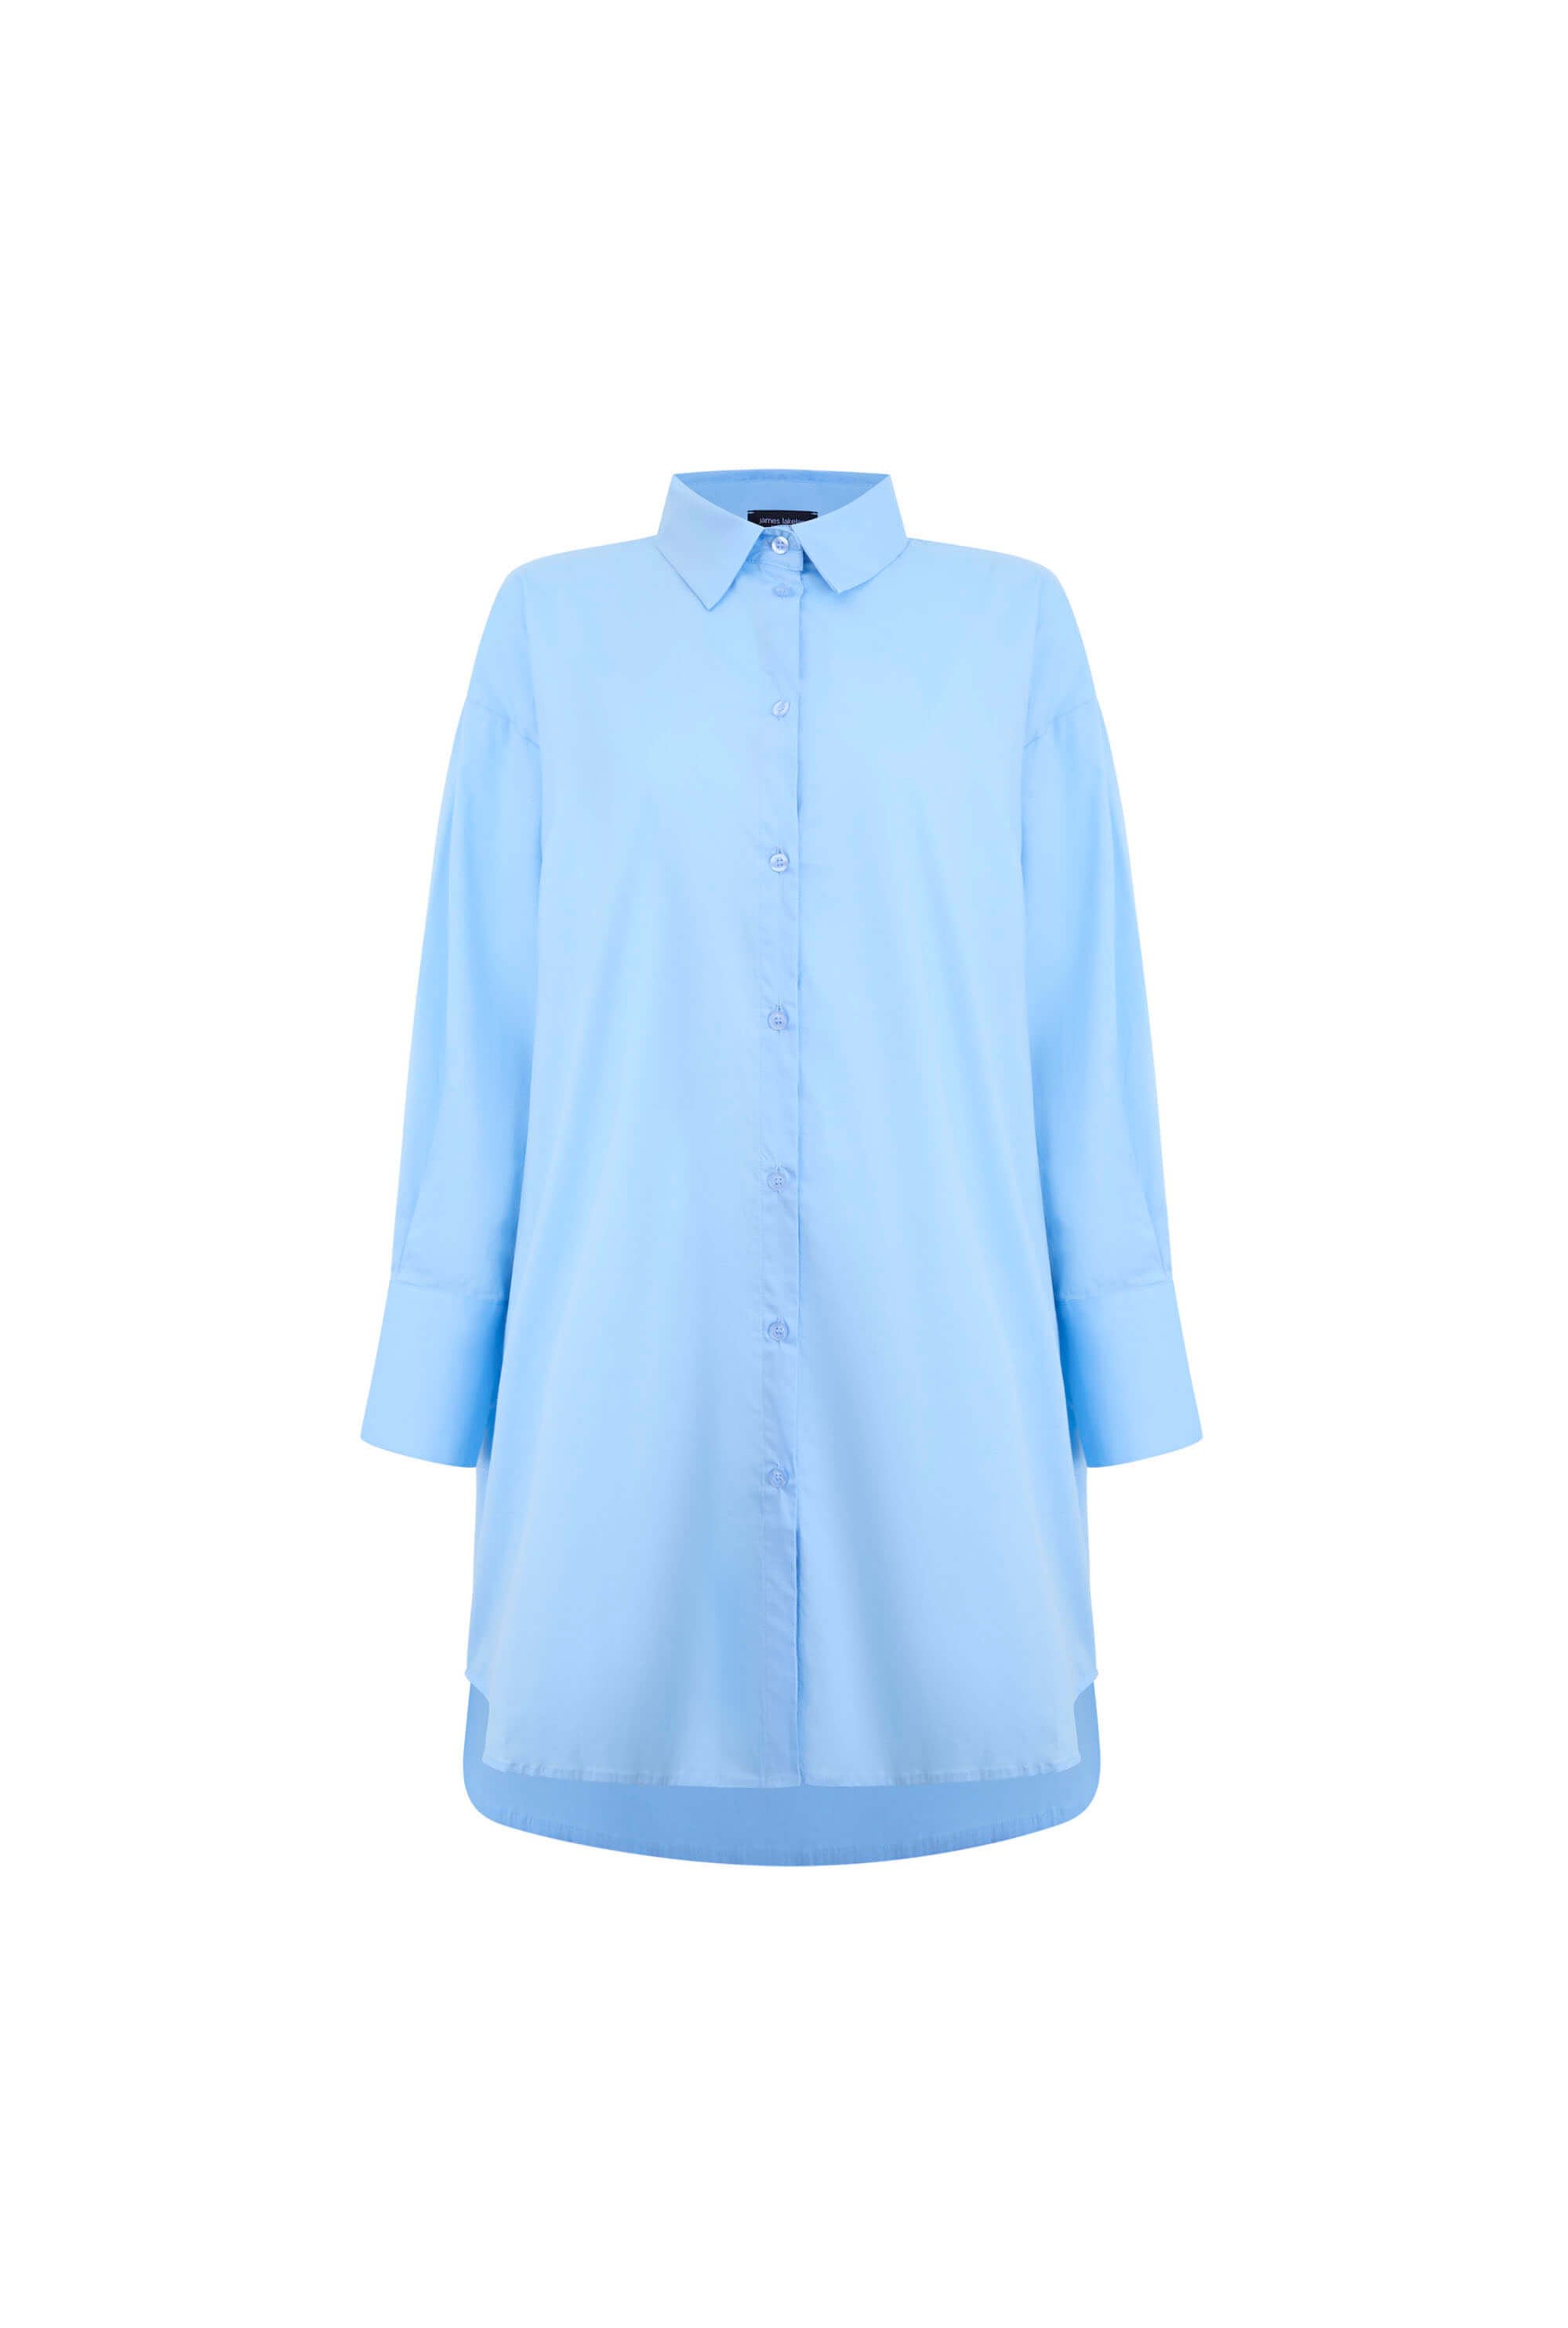 James Lakeland Women's Oversized Plain Shirt Pale Blue